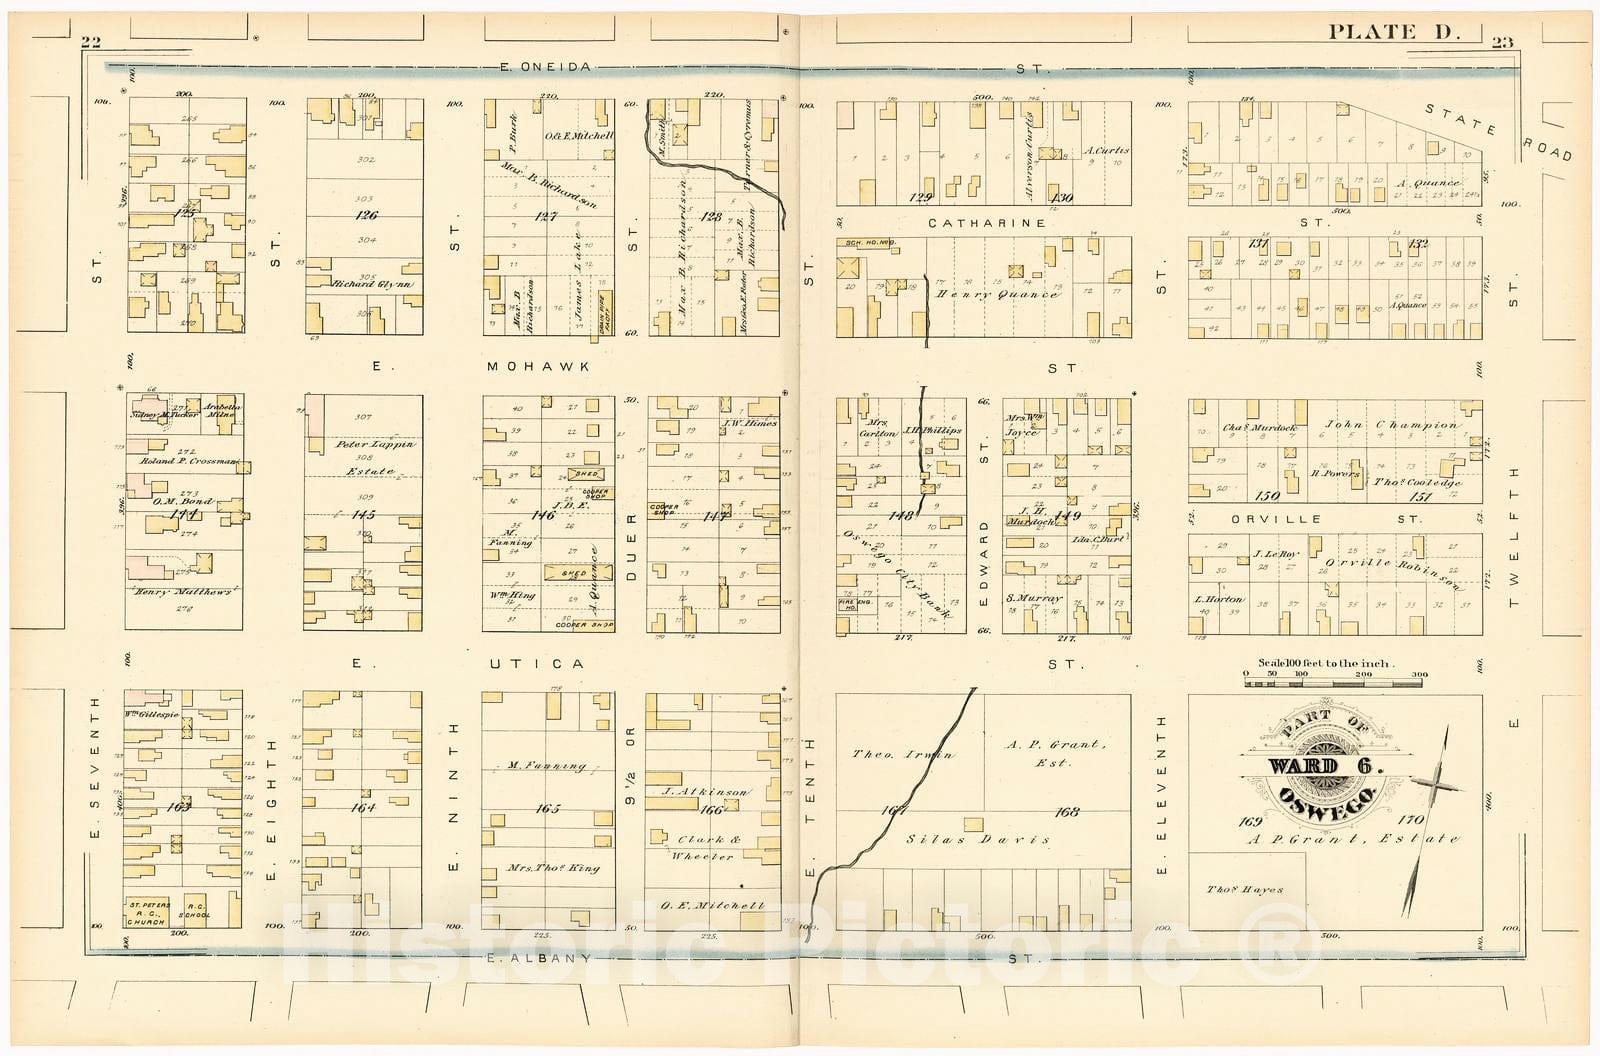 Historic 1880 Map - City Atlas of Oswego, New York - Part of Ward 6. Oswego. Plate D. - Atlas of The City of Oswego N.Y.